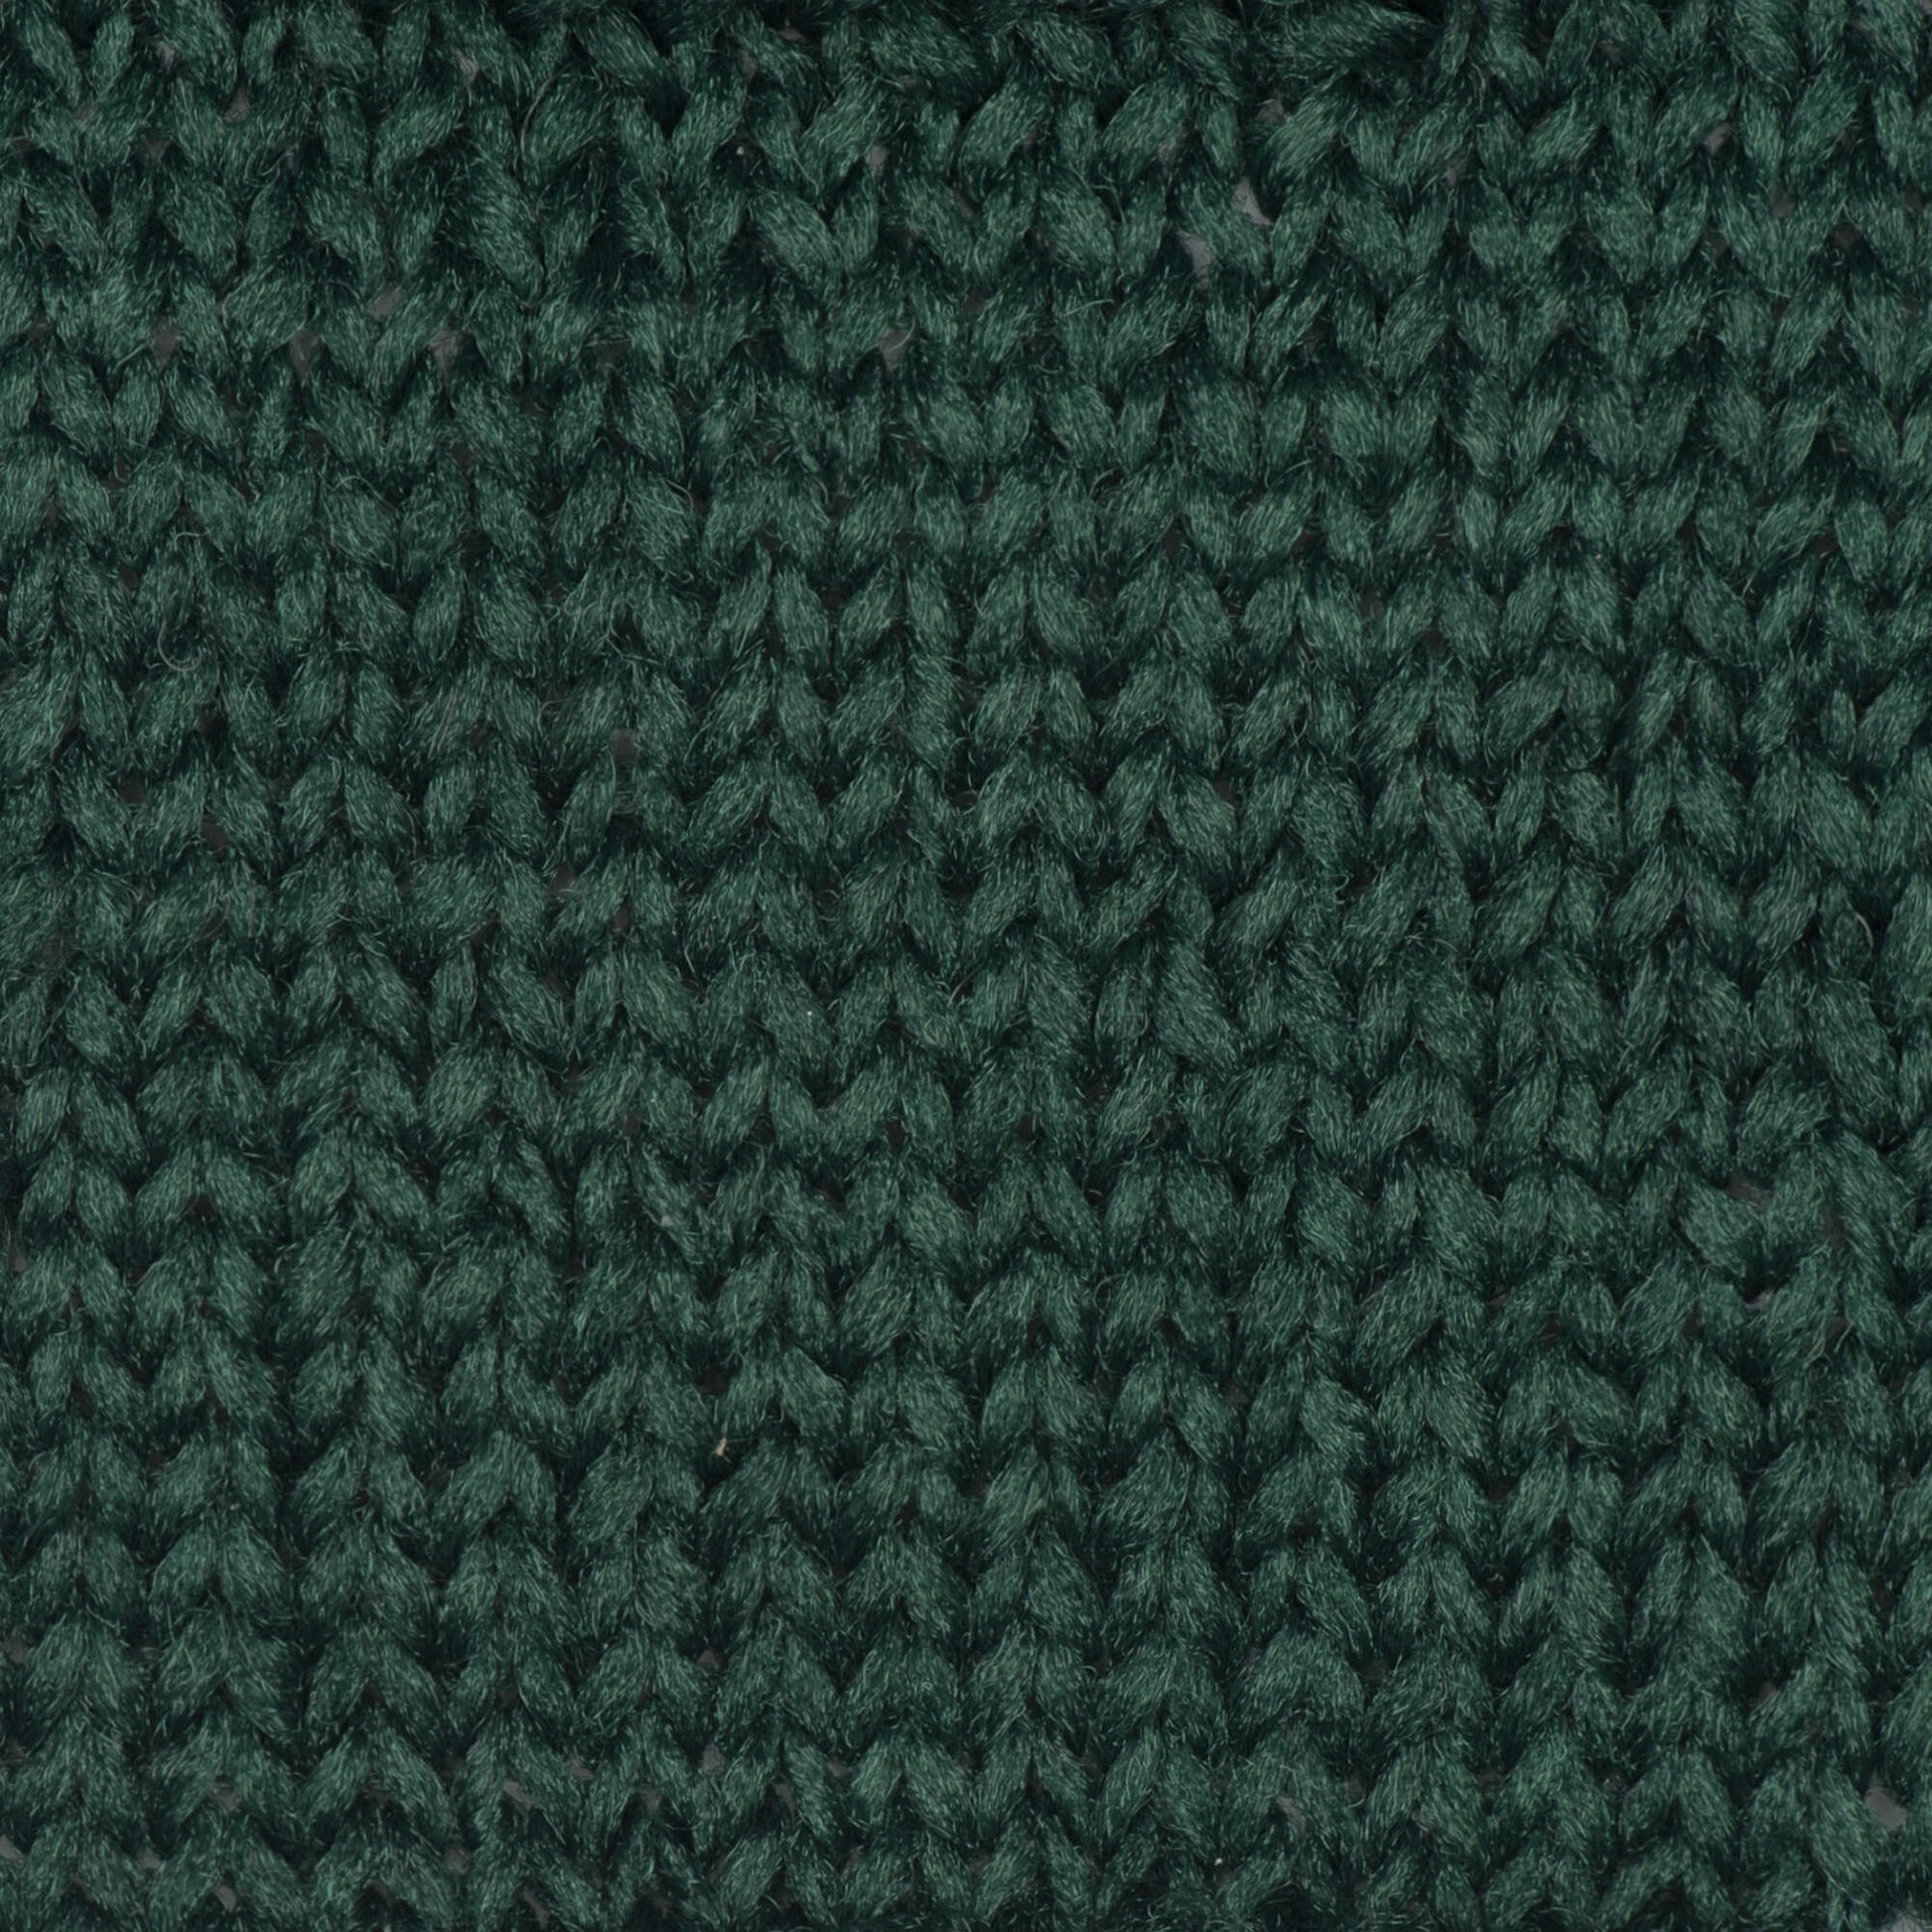 Phentex Slipper & Craft Yarn Deep Green